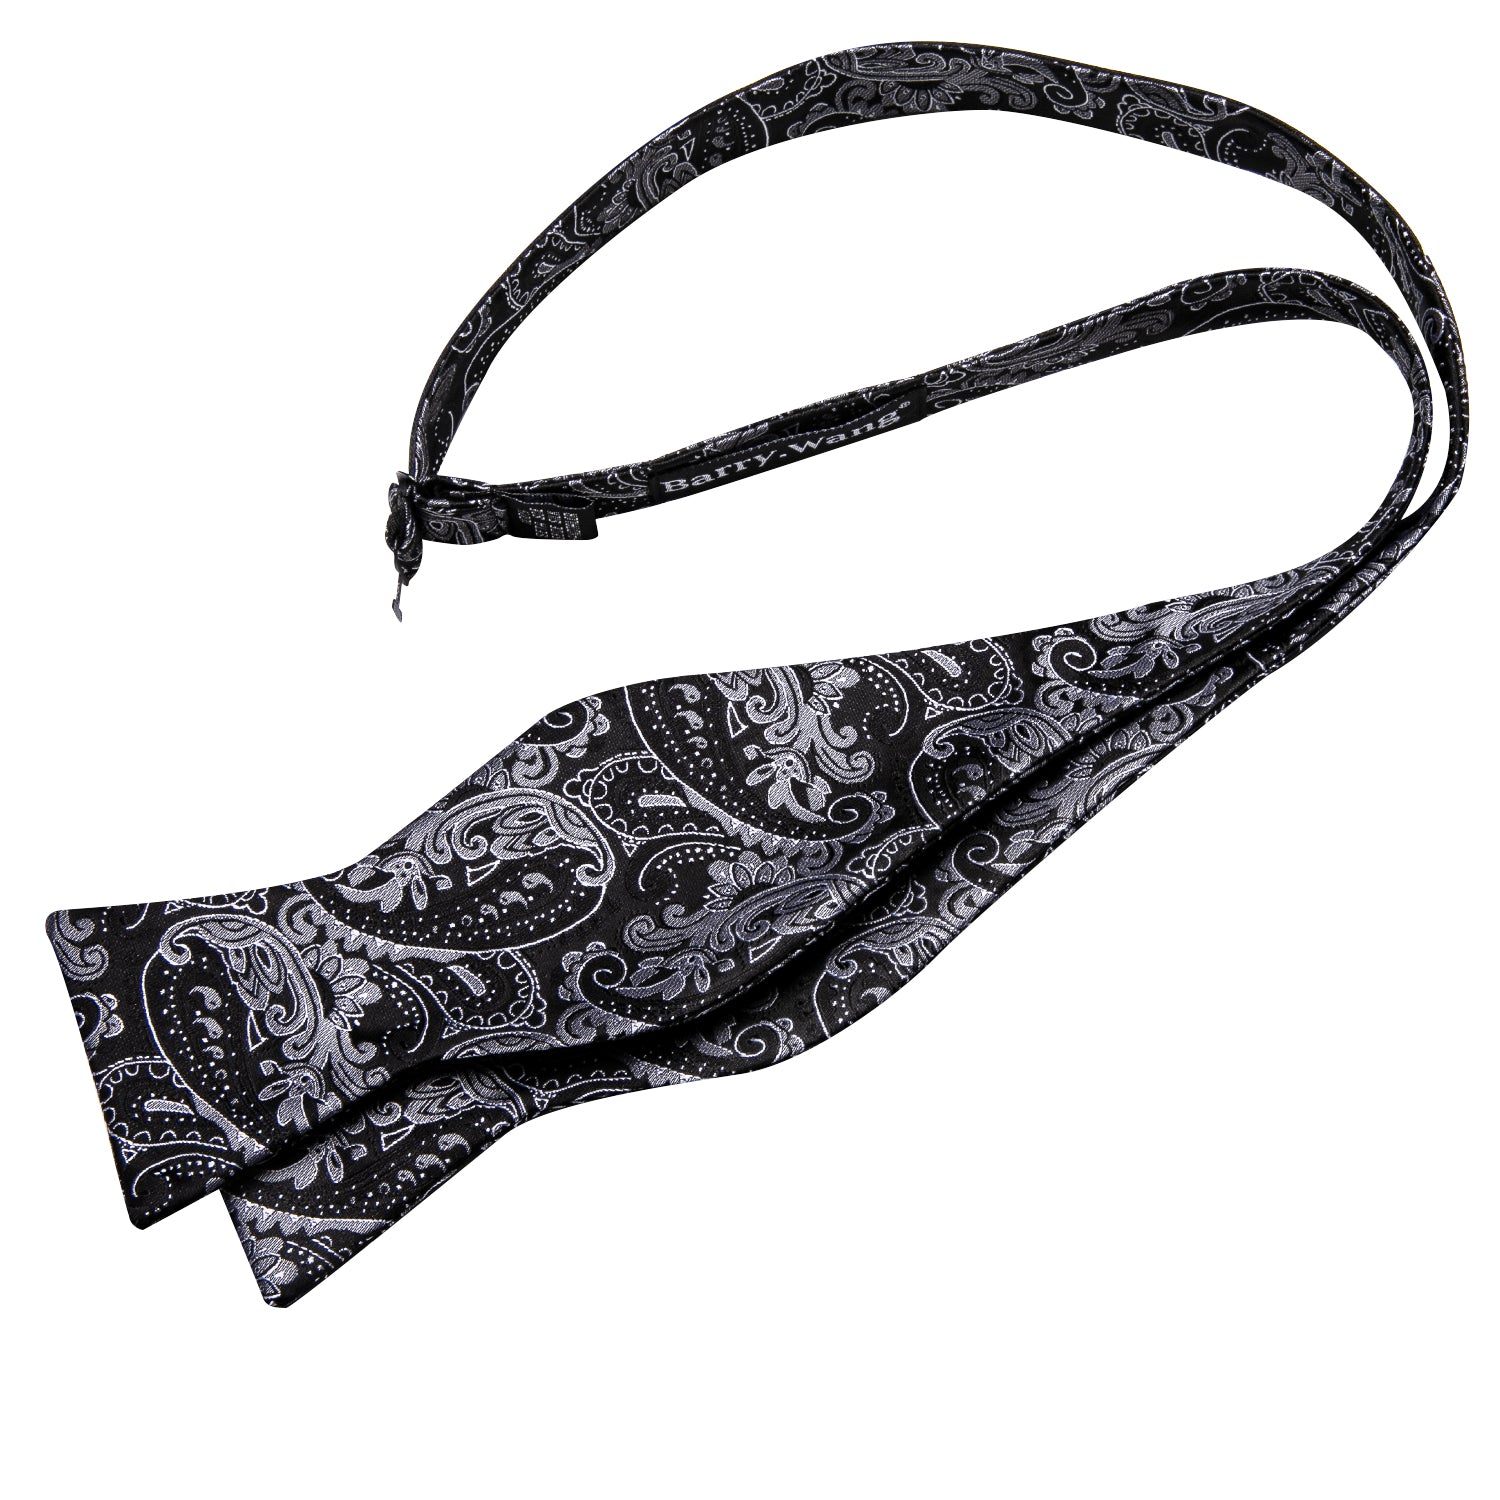 Barry.wang Black Tie Paisley Grey Men's Silk Bow Tie Hanky Cufflinks Set